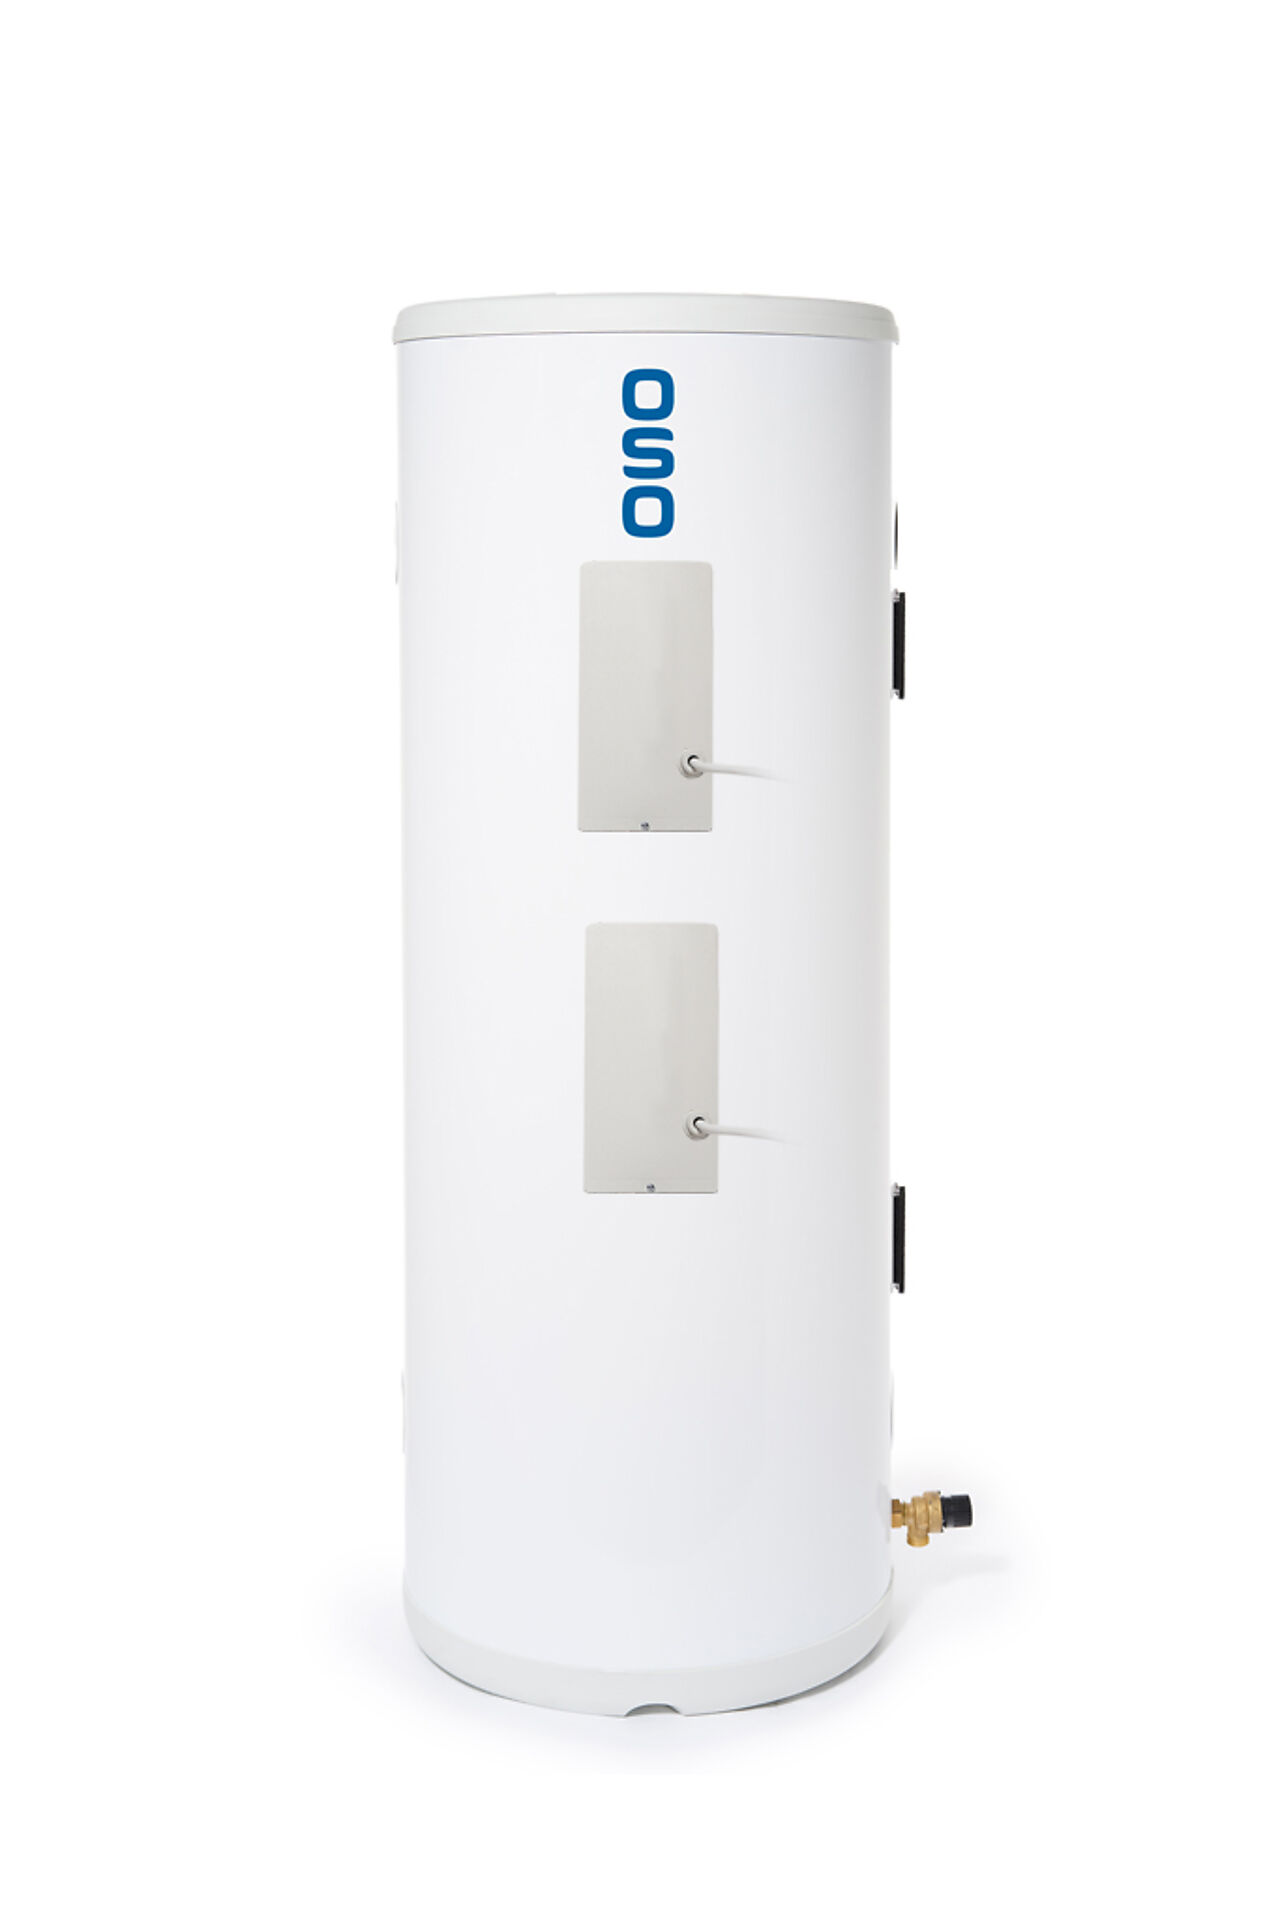 Oso Hotwater Oso AS100 akkumulatortank 5,6 kW / 1x230v 100l 1